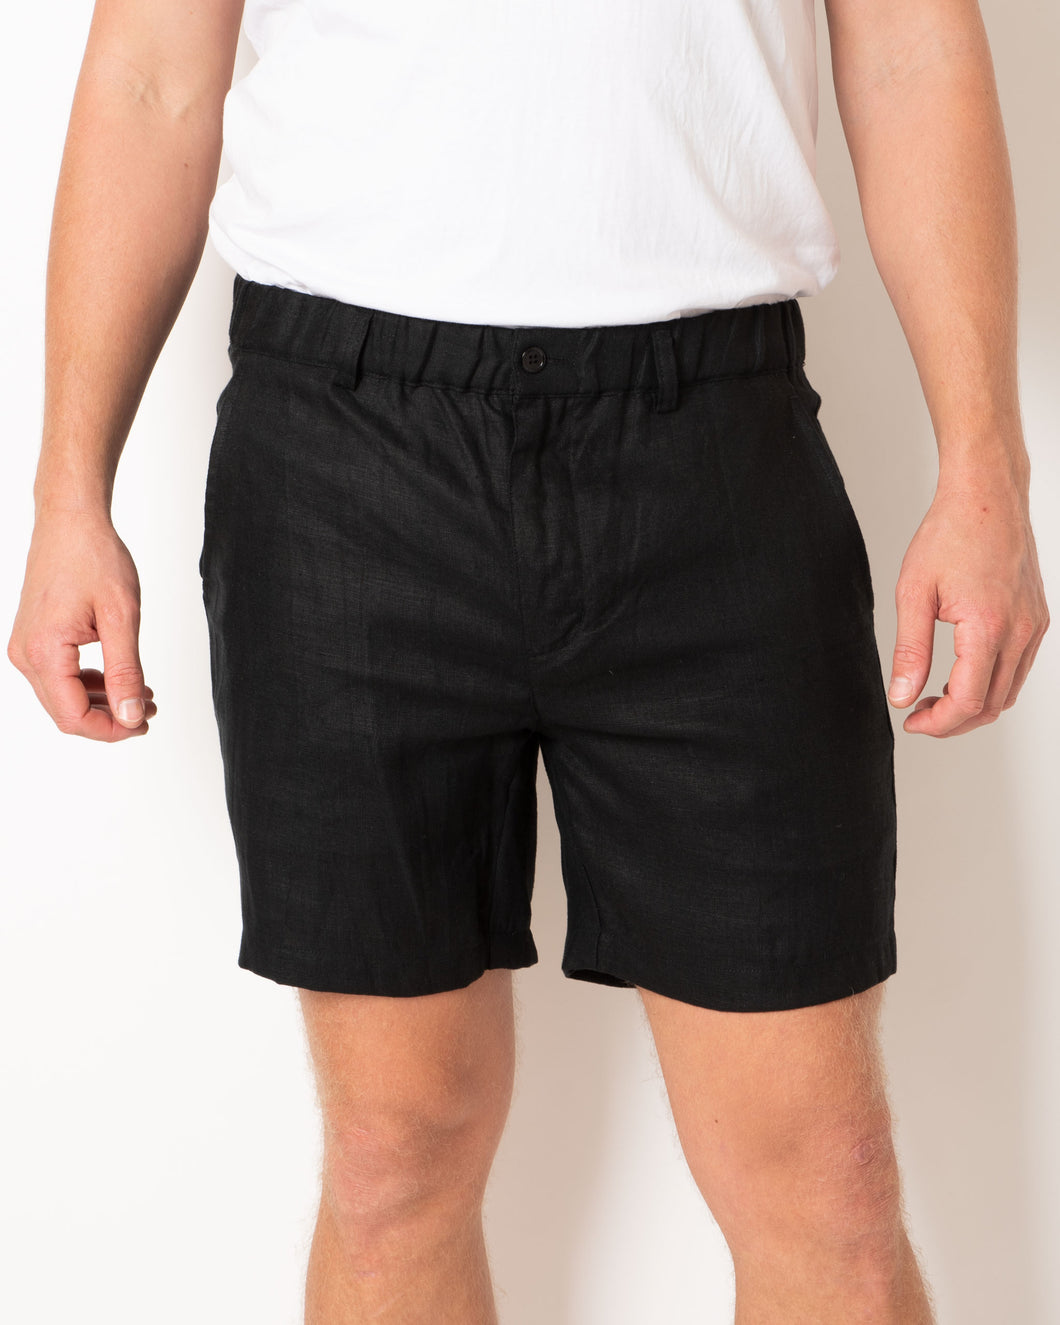 DESTii Black Linen Shorts